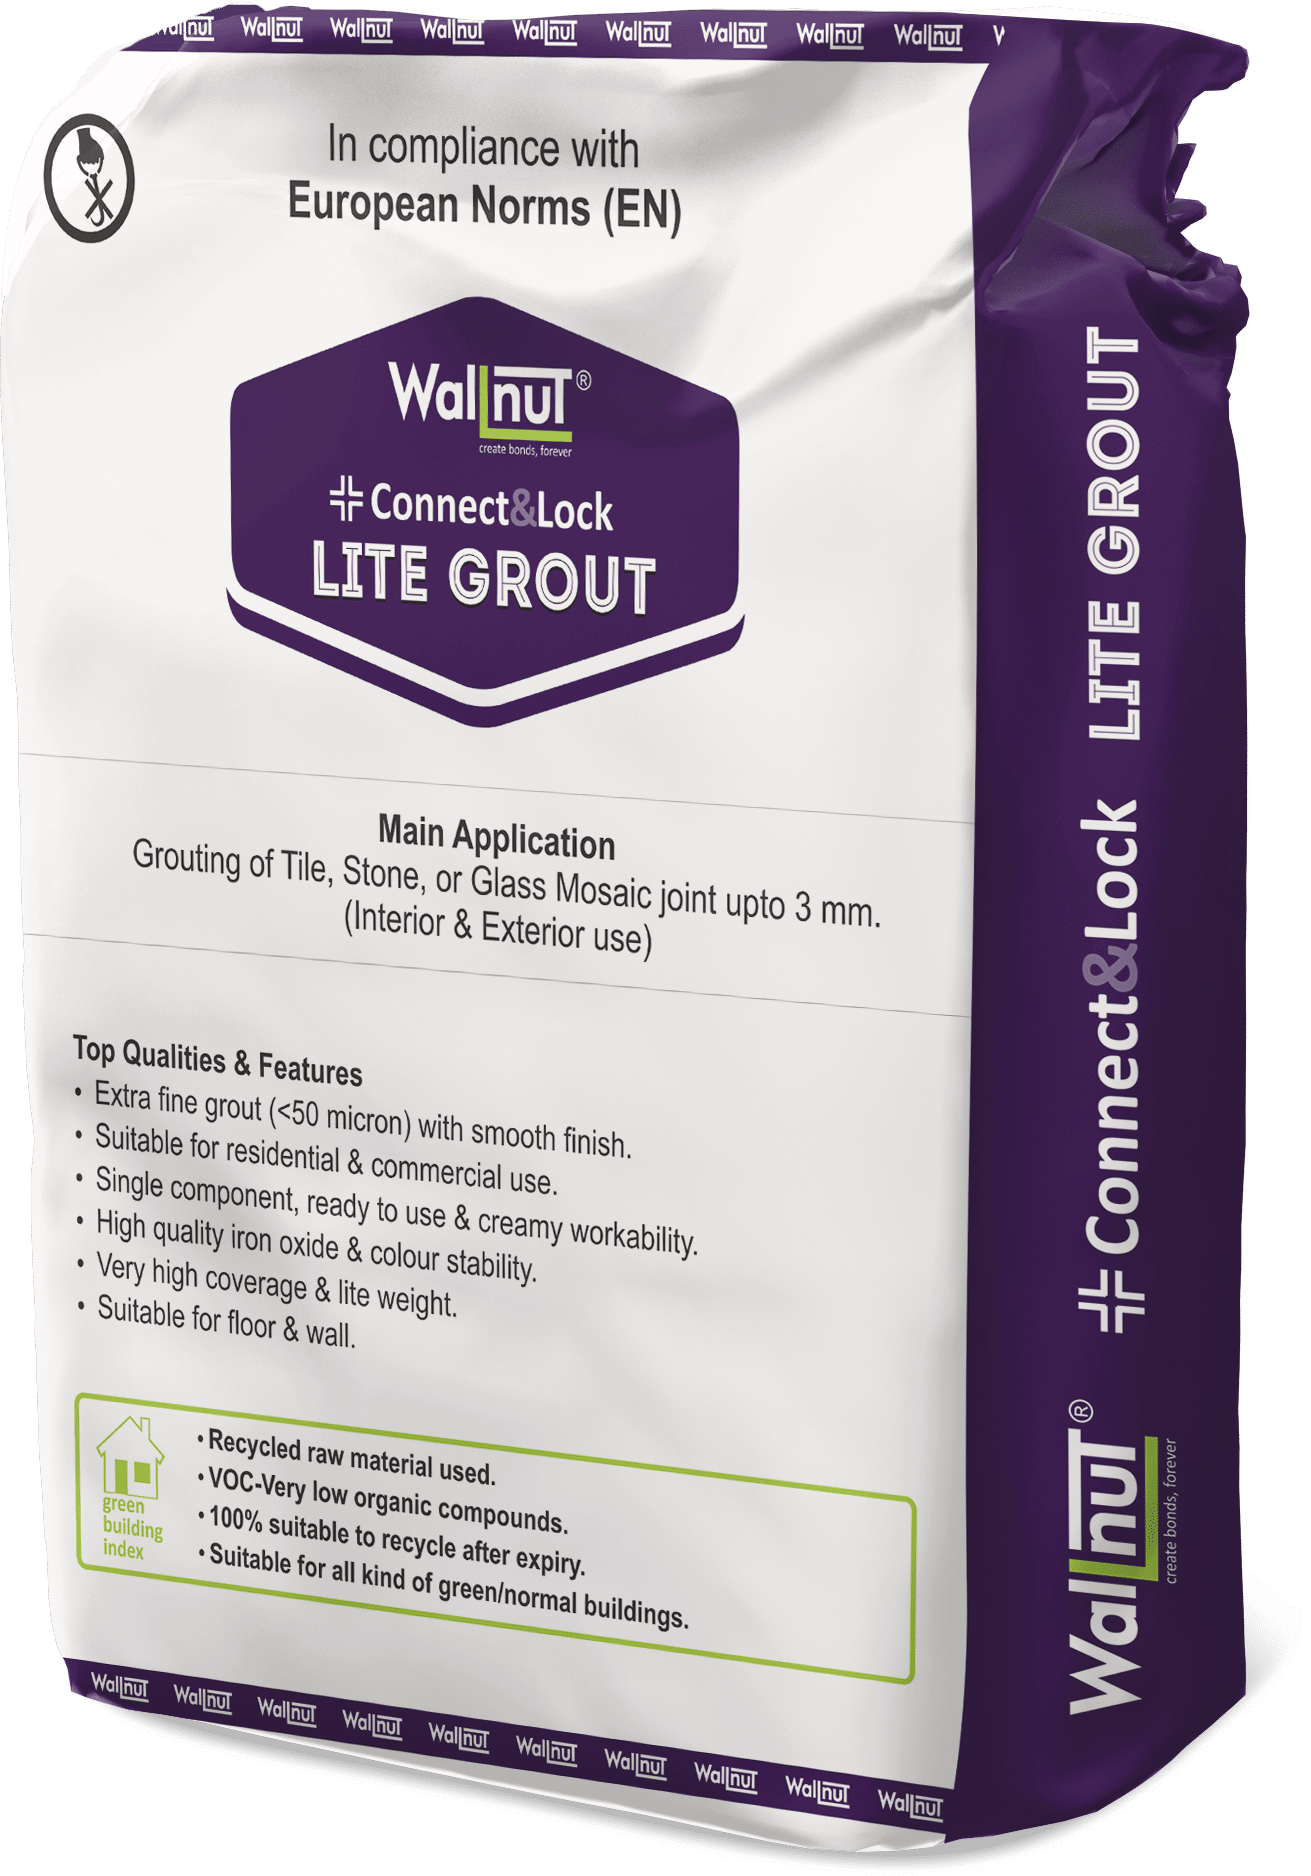 Wallnut Connec & Lock Lite grout